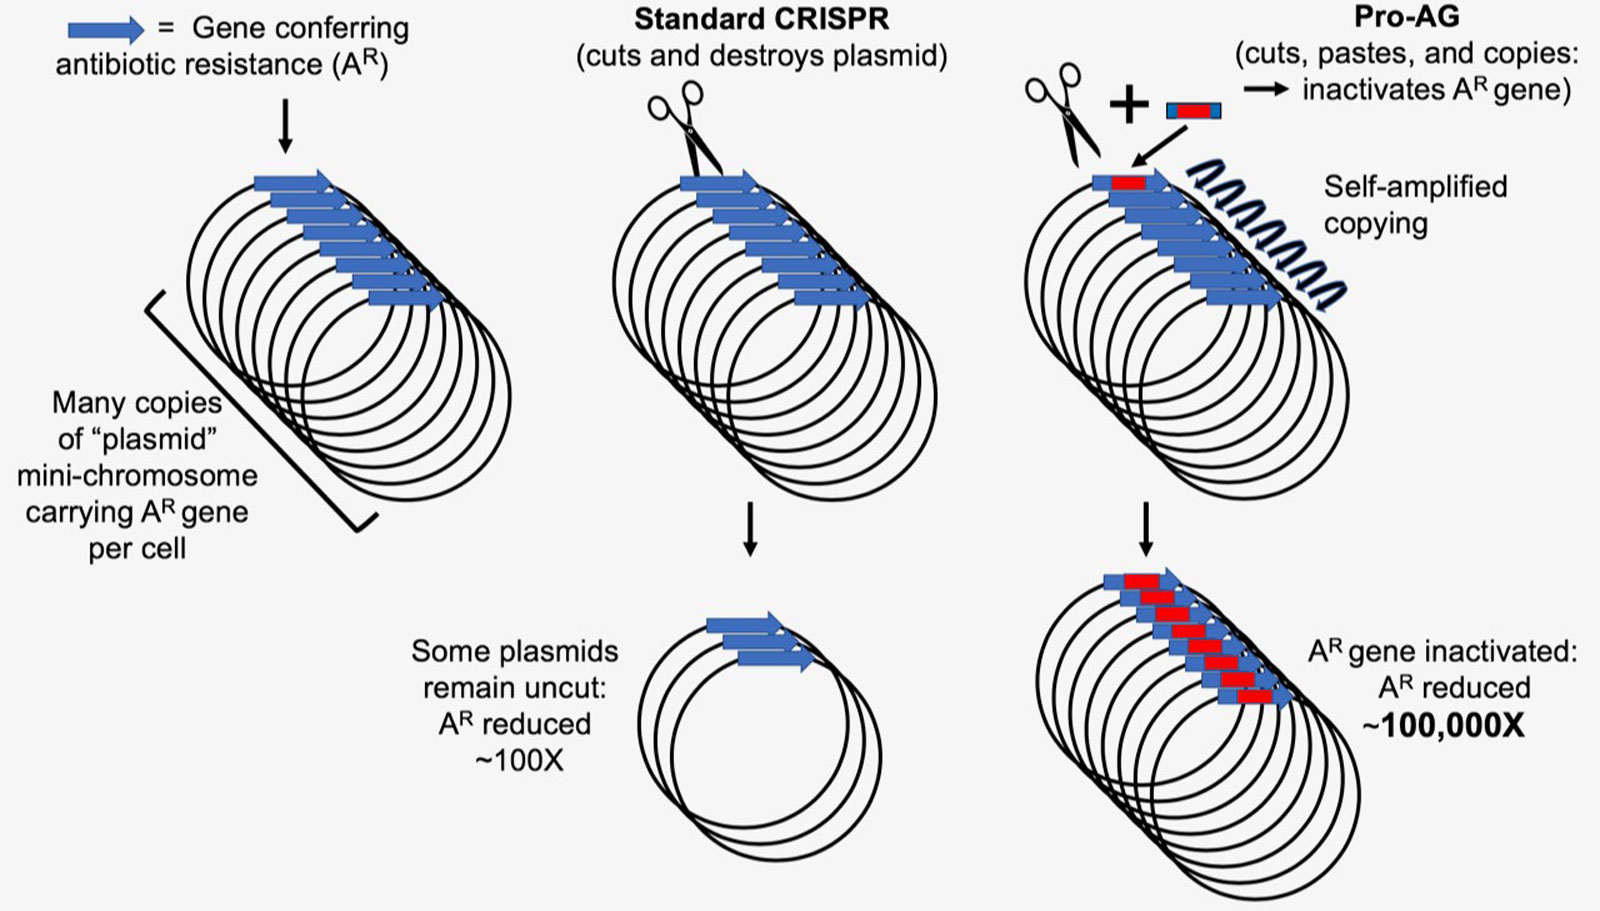 Figure depicting Pro-AG and CRISPR gene editing